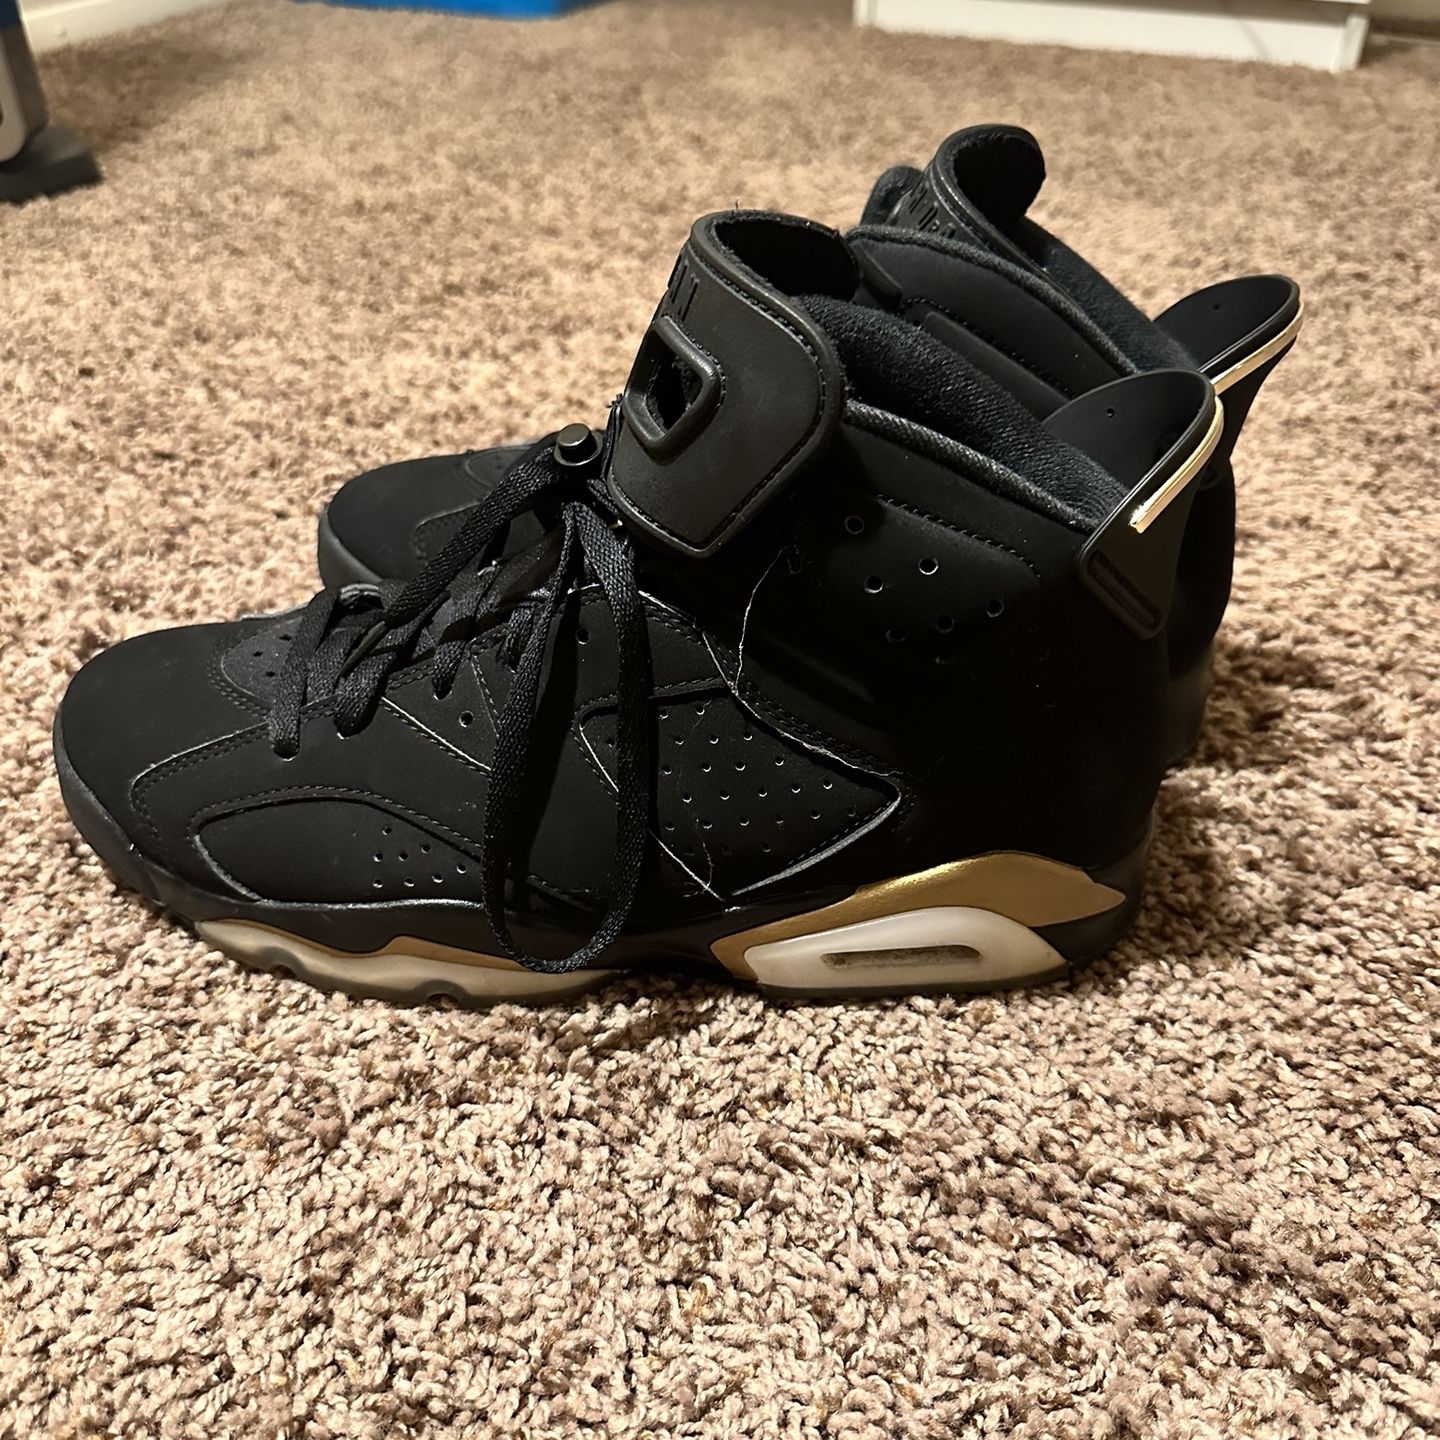 Jordan 6 Retro DMP Size 9.5